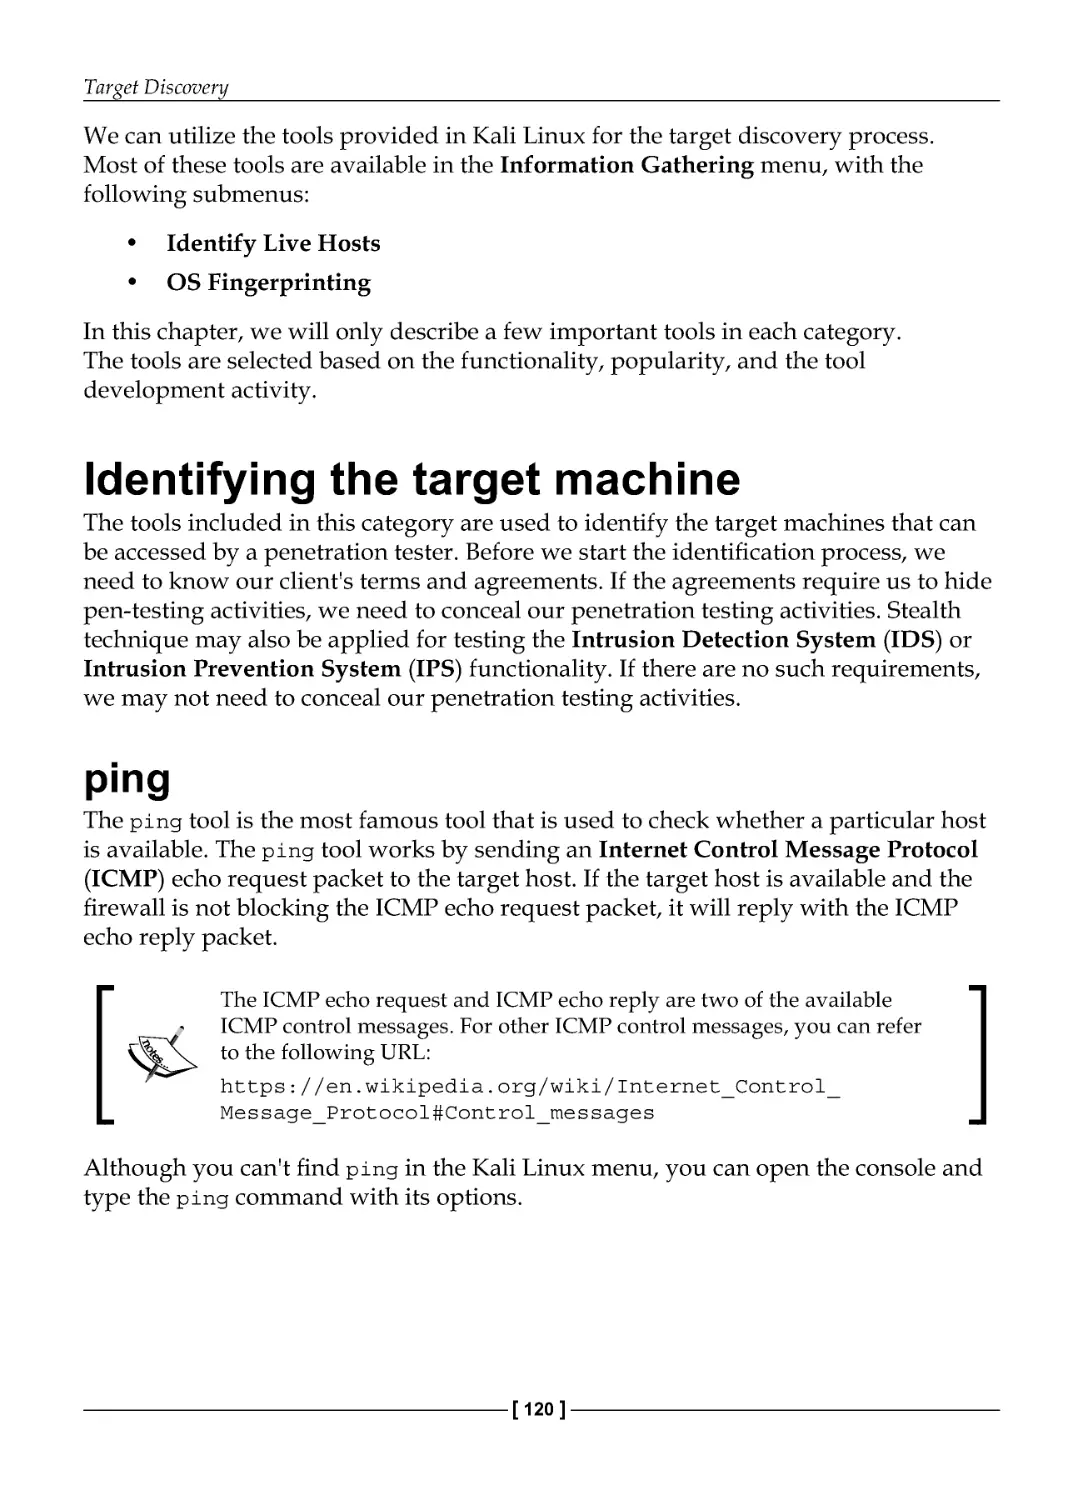 Identifying the target machine